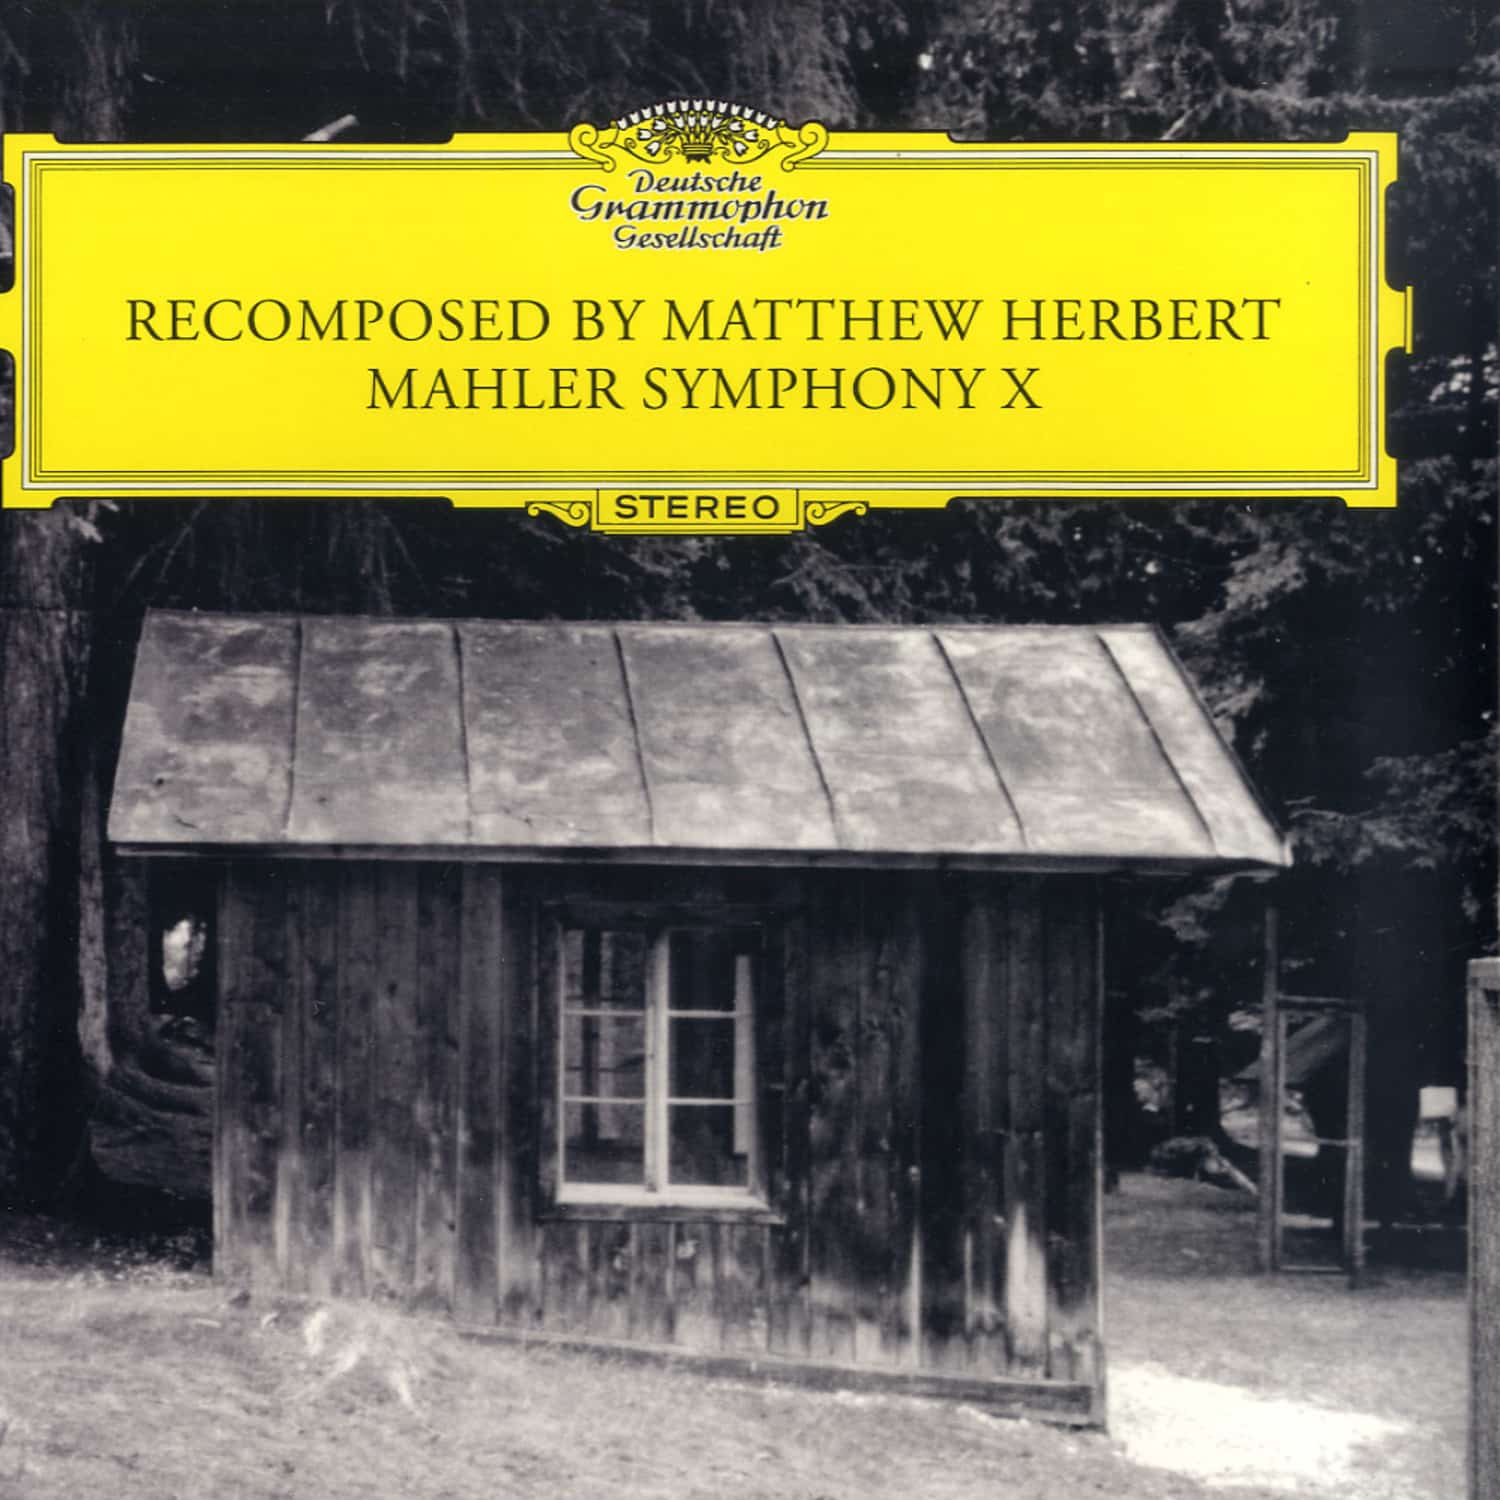 Matthew Herbert - RECOMPOSED BY MAHLER SYMPHONY X 